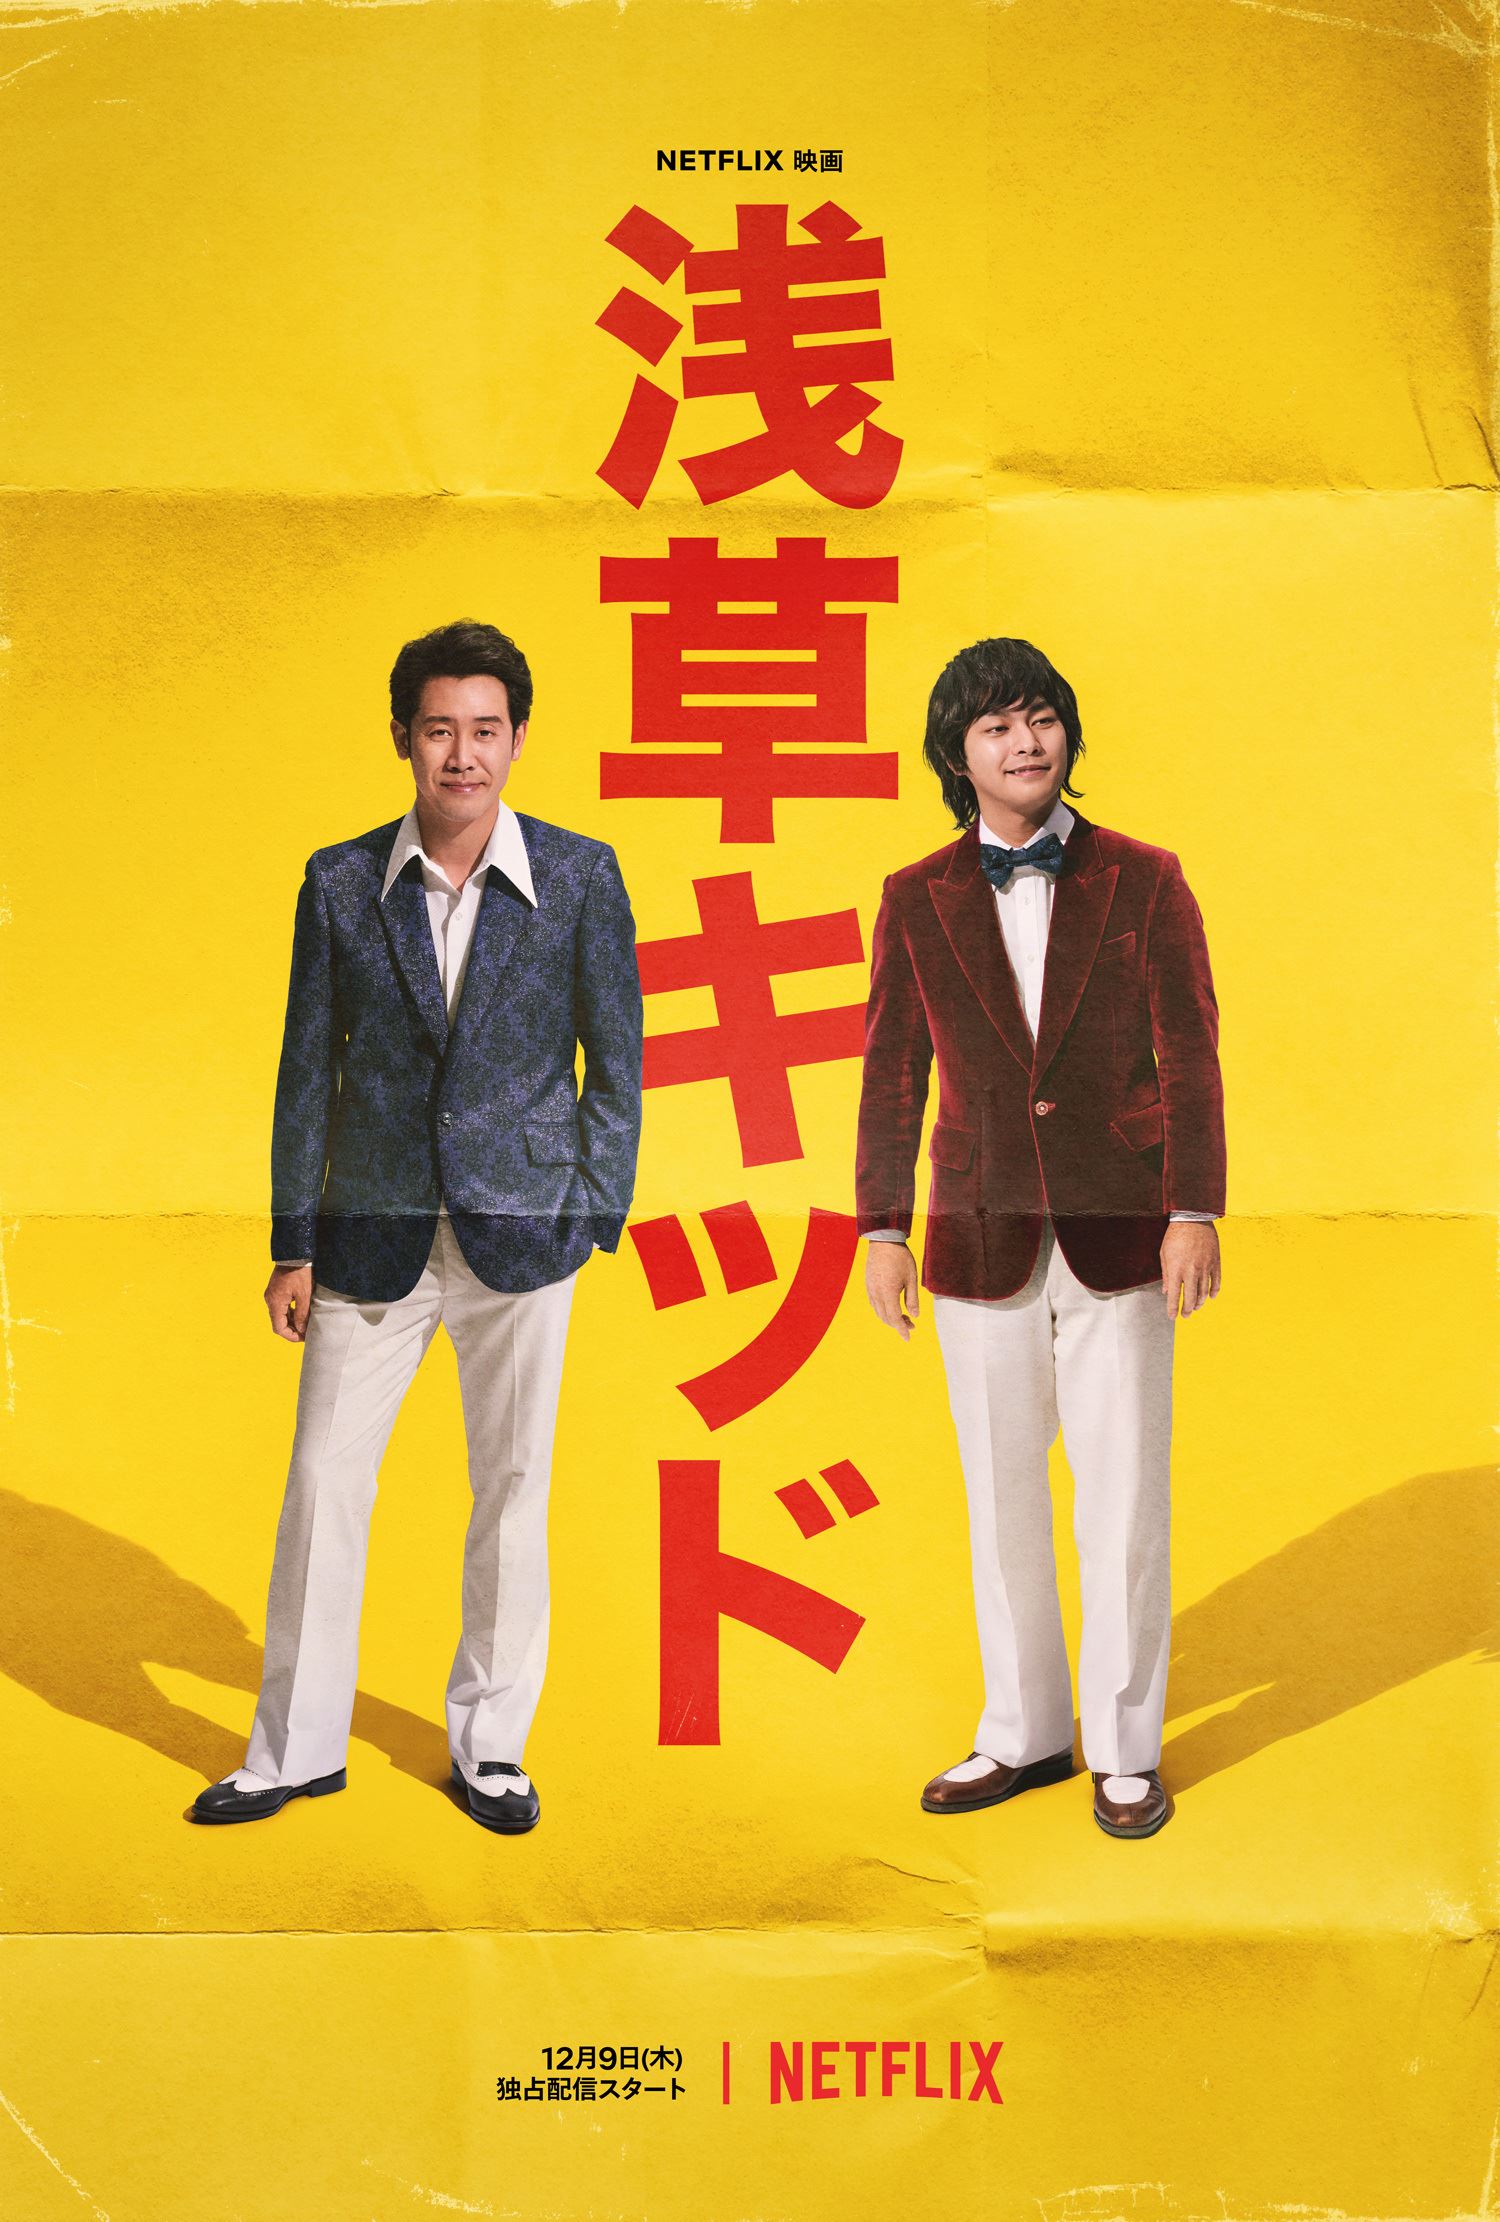 Kitano Takeshi biopic "Asakusa Kid" first exposure trailer